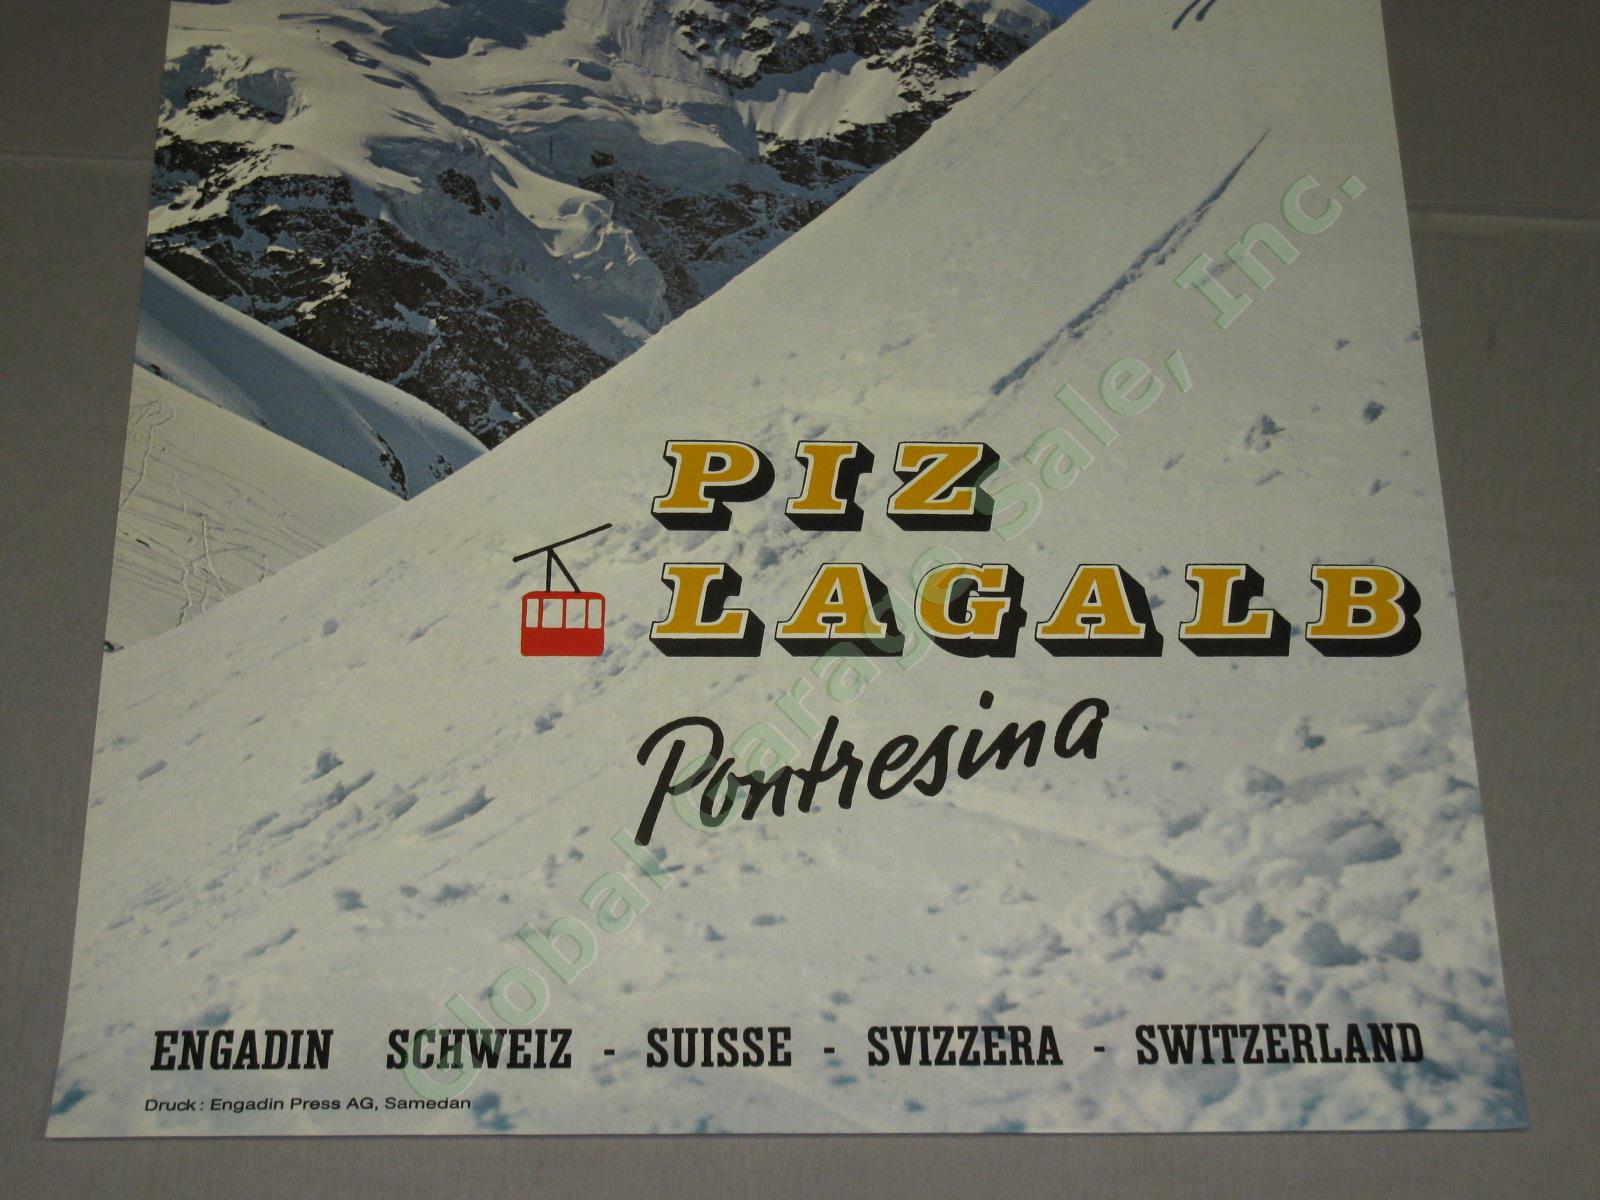 Vtg Orig 1968 Swiss Ski Travel Poster Pontresina Piz Lagalb Engadin Switzerland 3